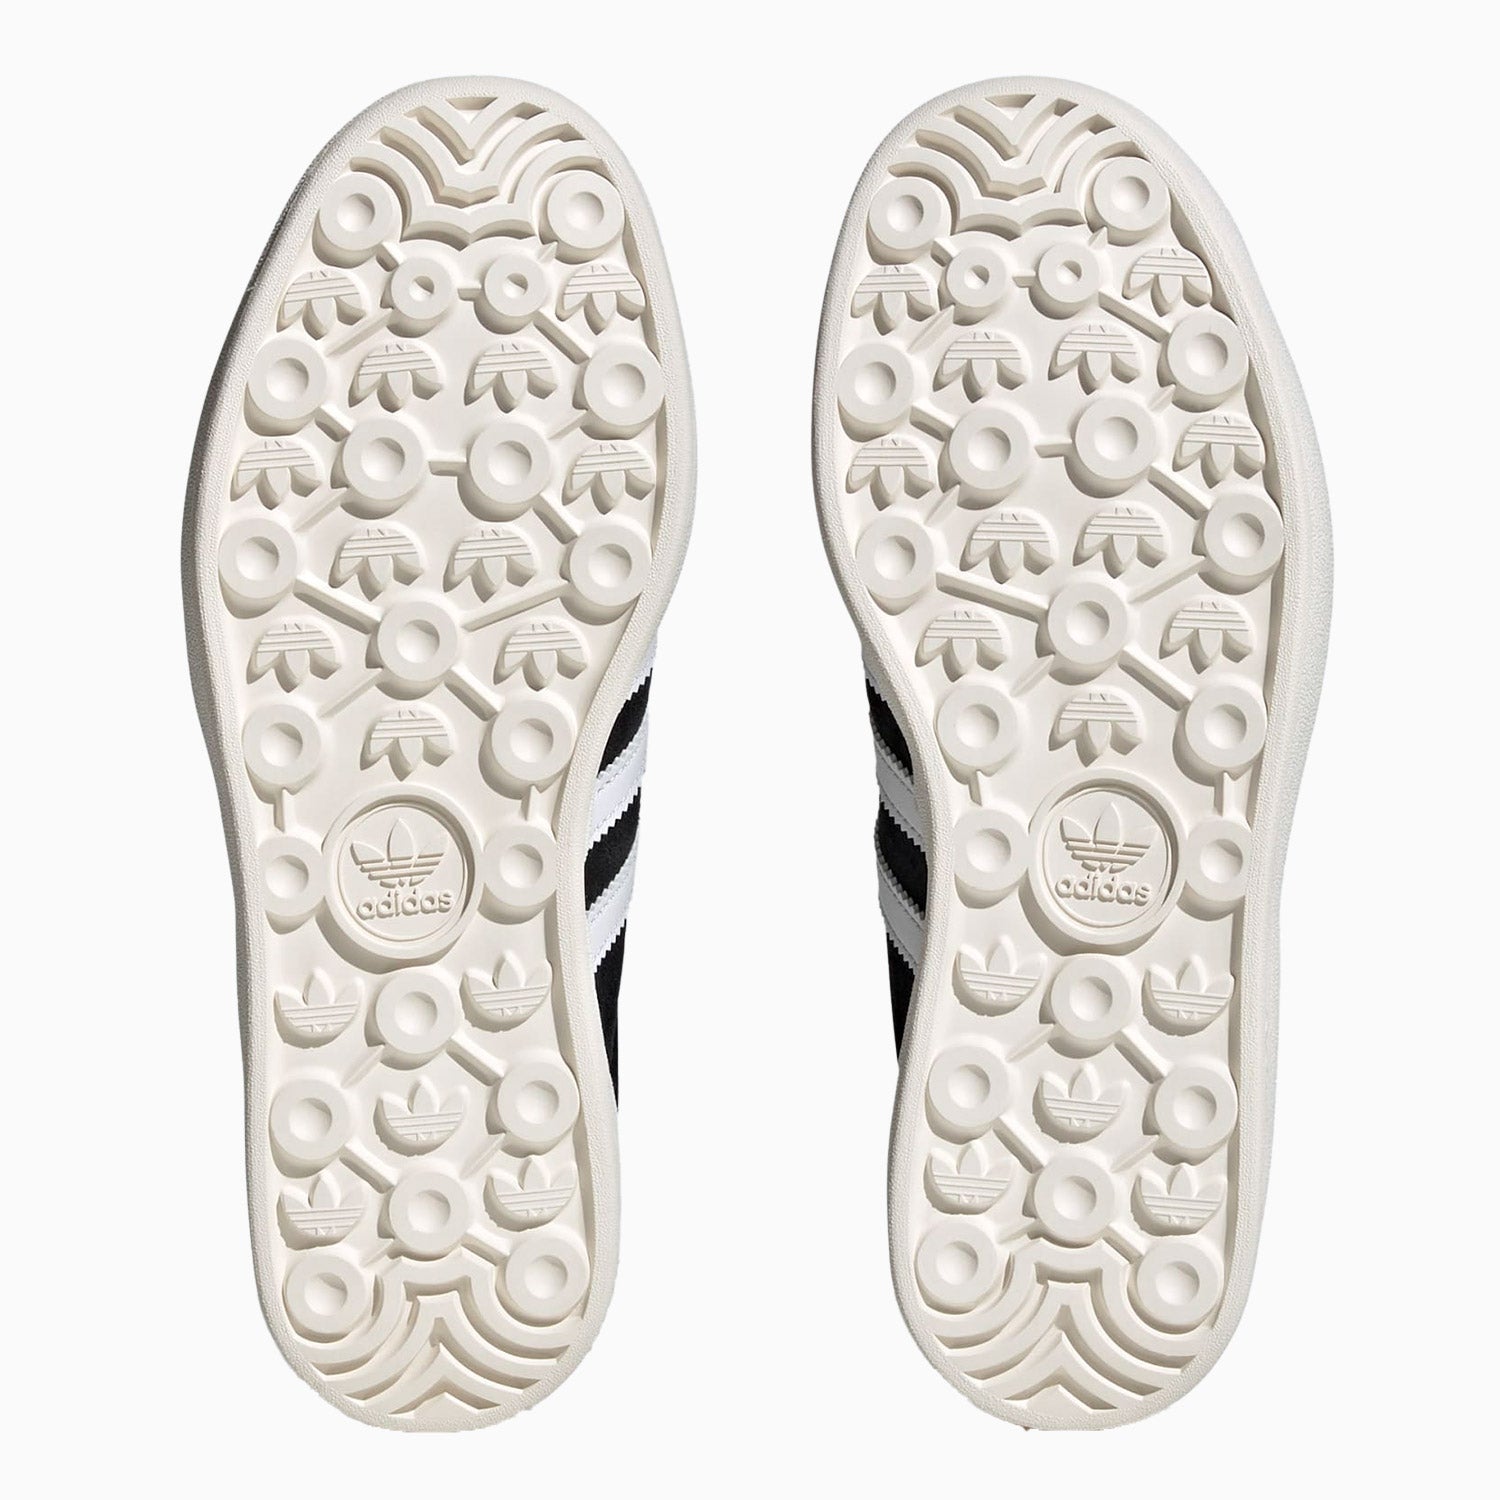 adidas-originals-gazelle-bold-shoes-hq6912